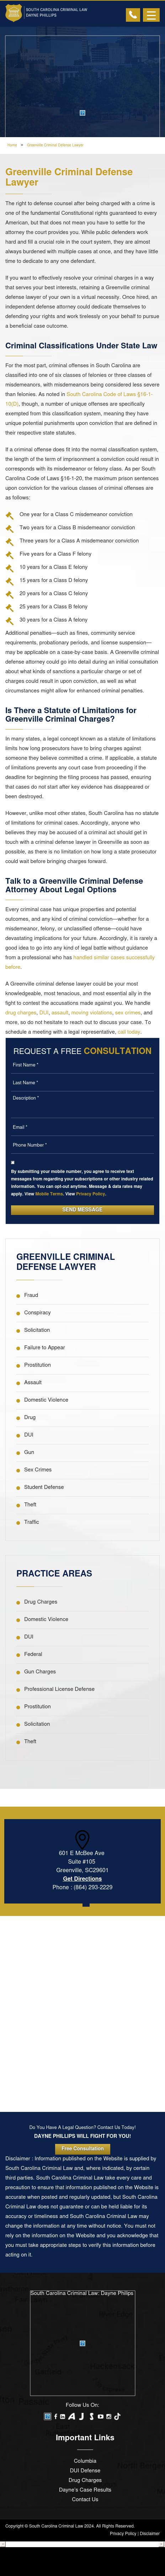  South Carolina Criminal Practice of Price Benowitz - Greenville, SC  SC Lawyers